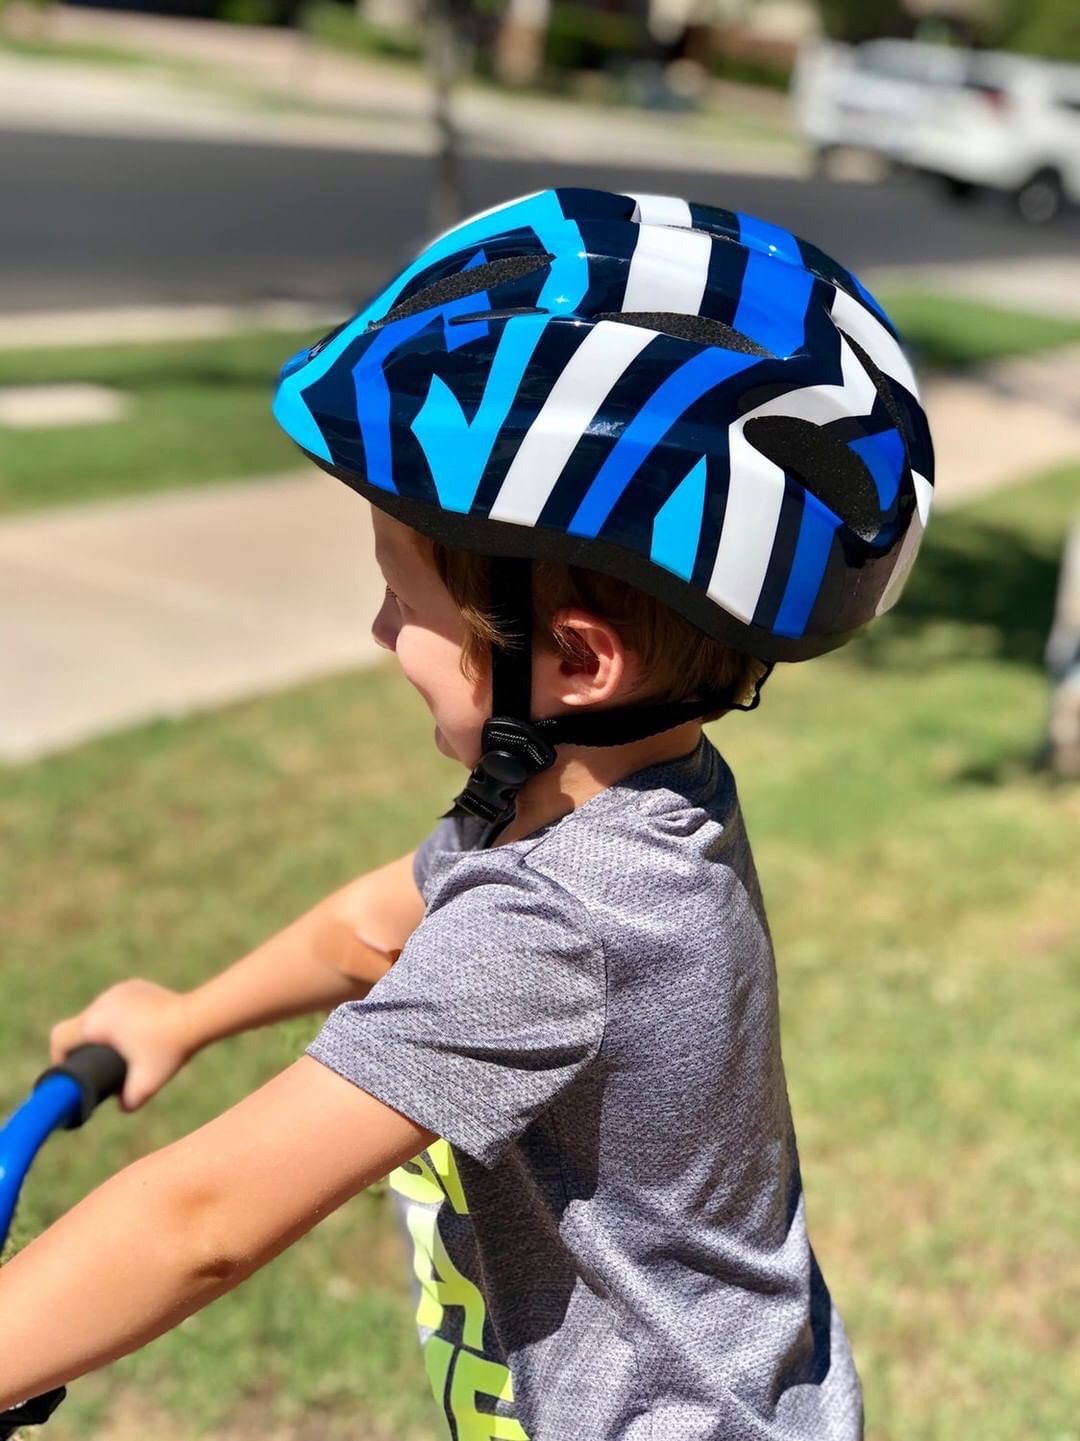 Merkapa Adjustable 3D Helmets for Toddler and Youth